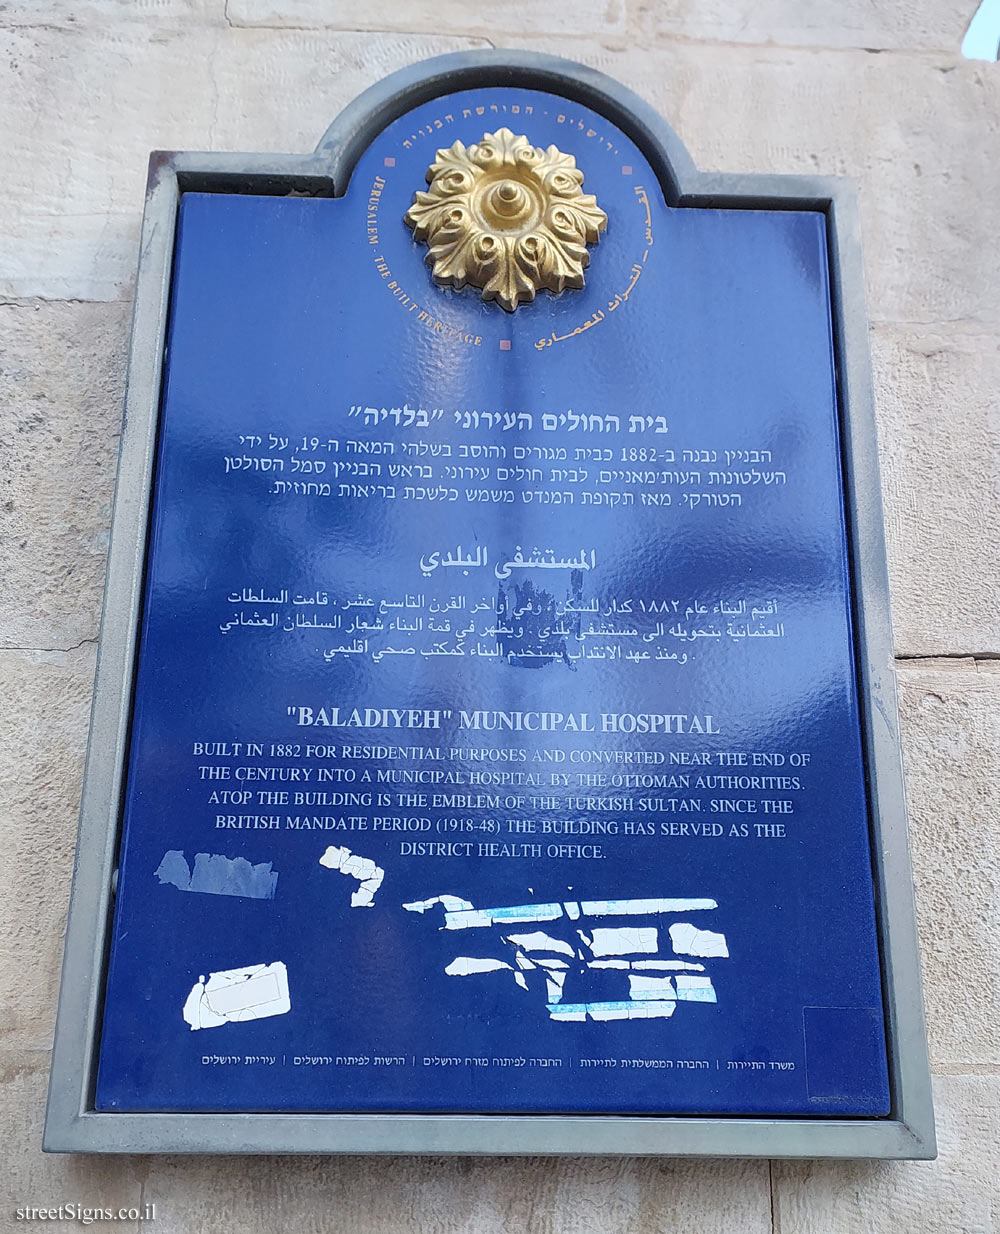 Jerusalem - The Built Heritage - Baladiyeh Municipal Hospital